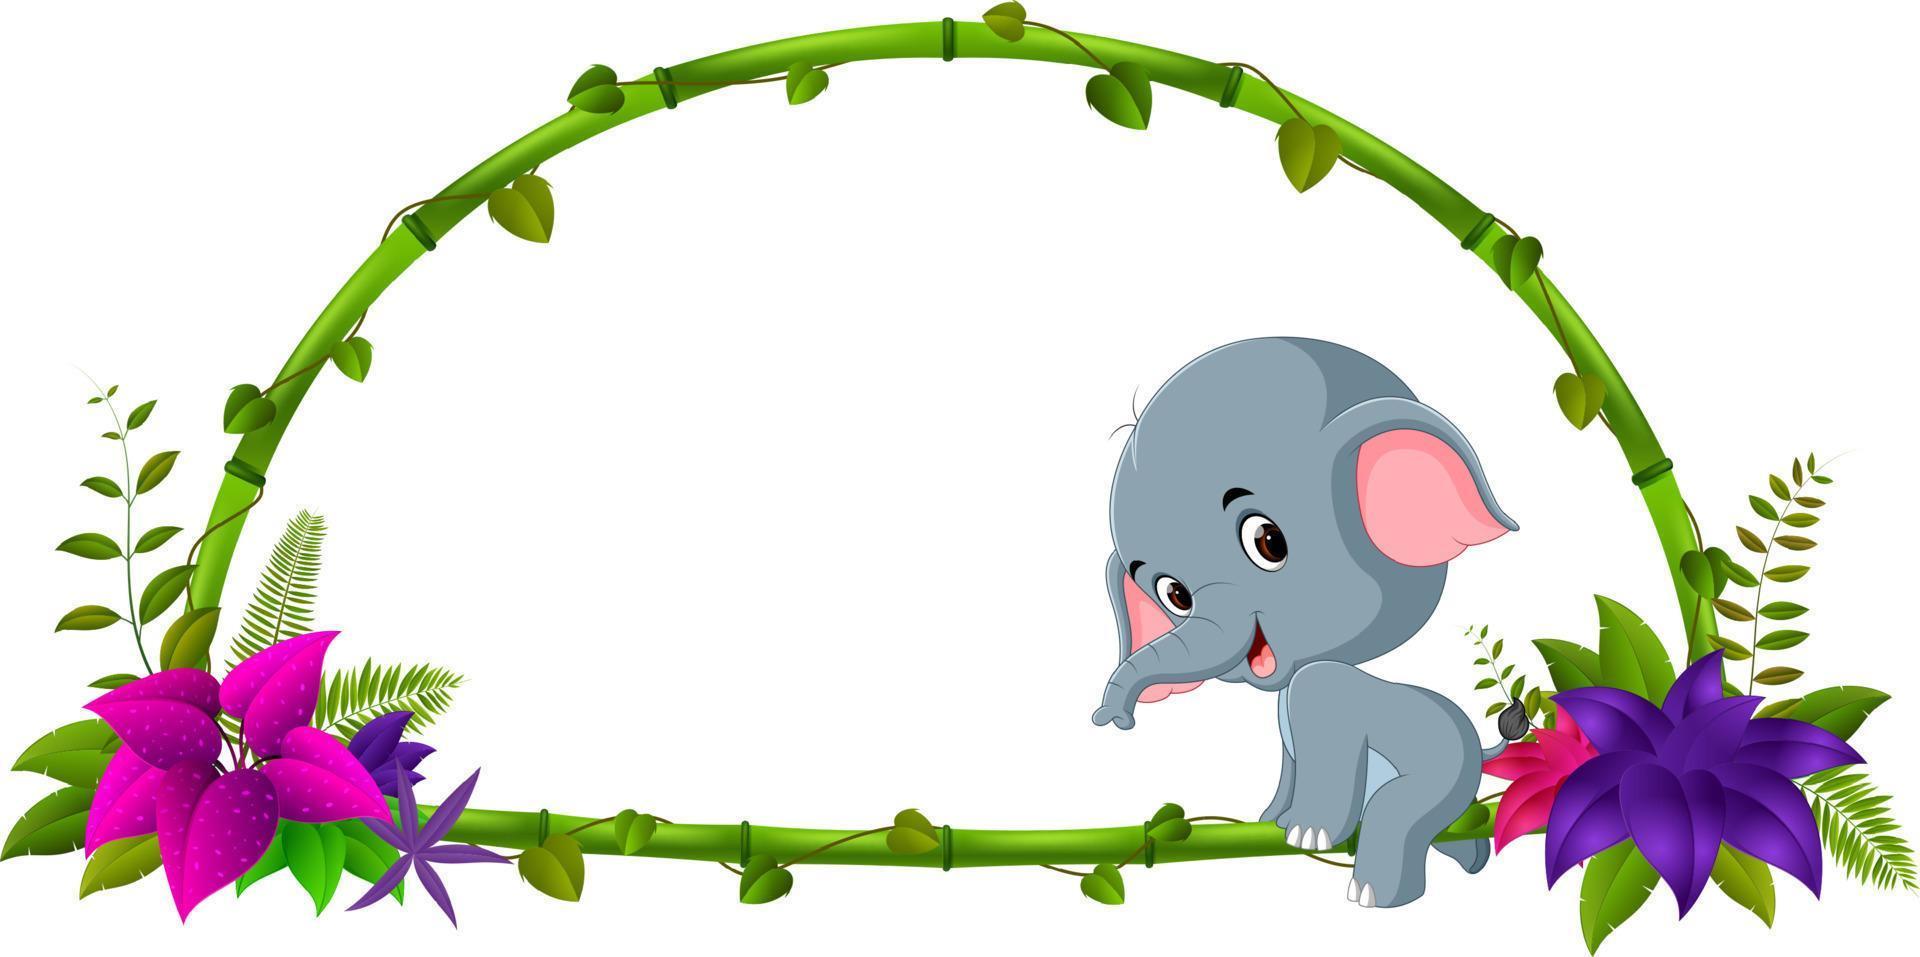 frame van bamboe en babyolifant vector